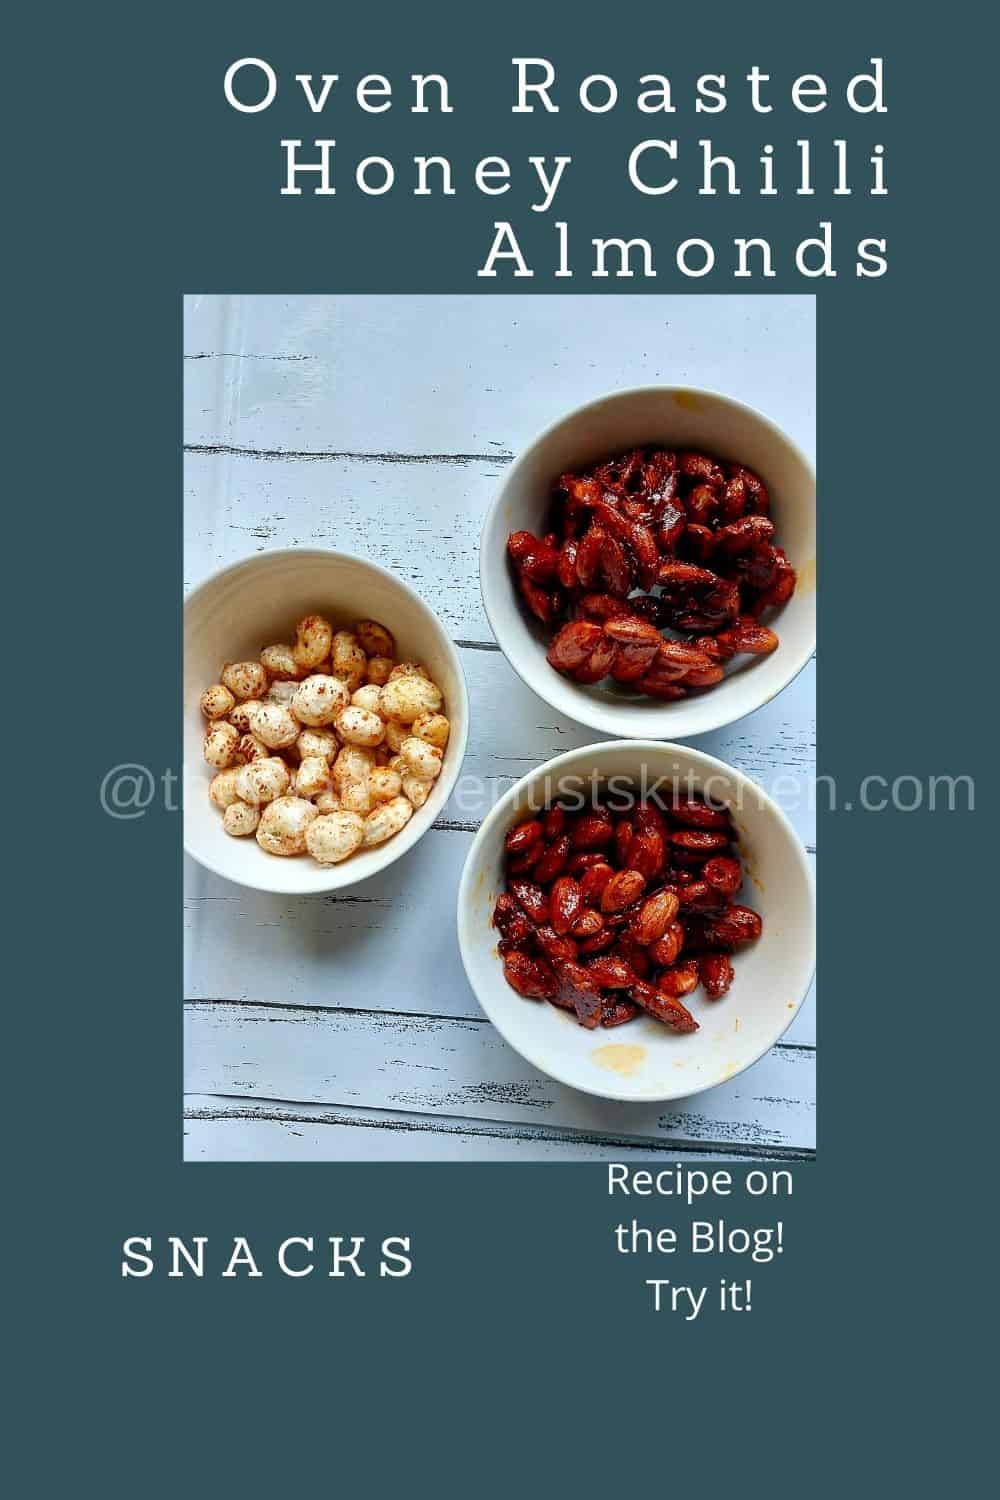 Honey Chilli Almonds